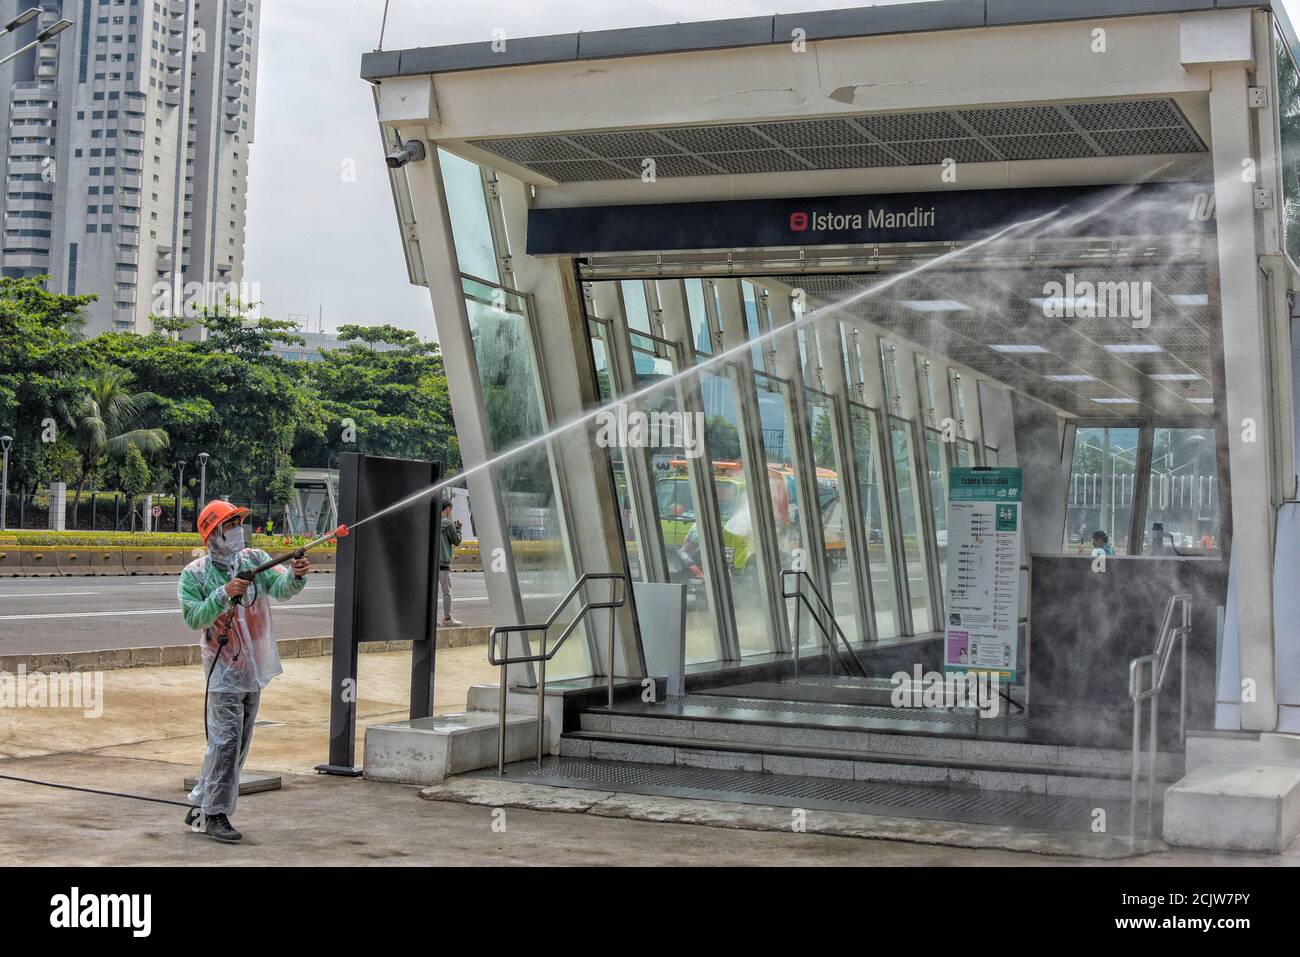 Indonesia, Jakarta - Maret 27, 2020: Jakarta provincial janitor sprays disinfectant liquid in public spaces to prevent the spread of coronavirus Stock Photo